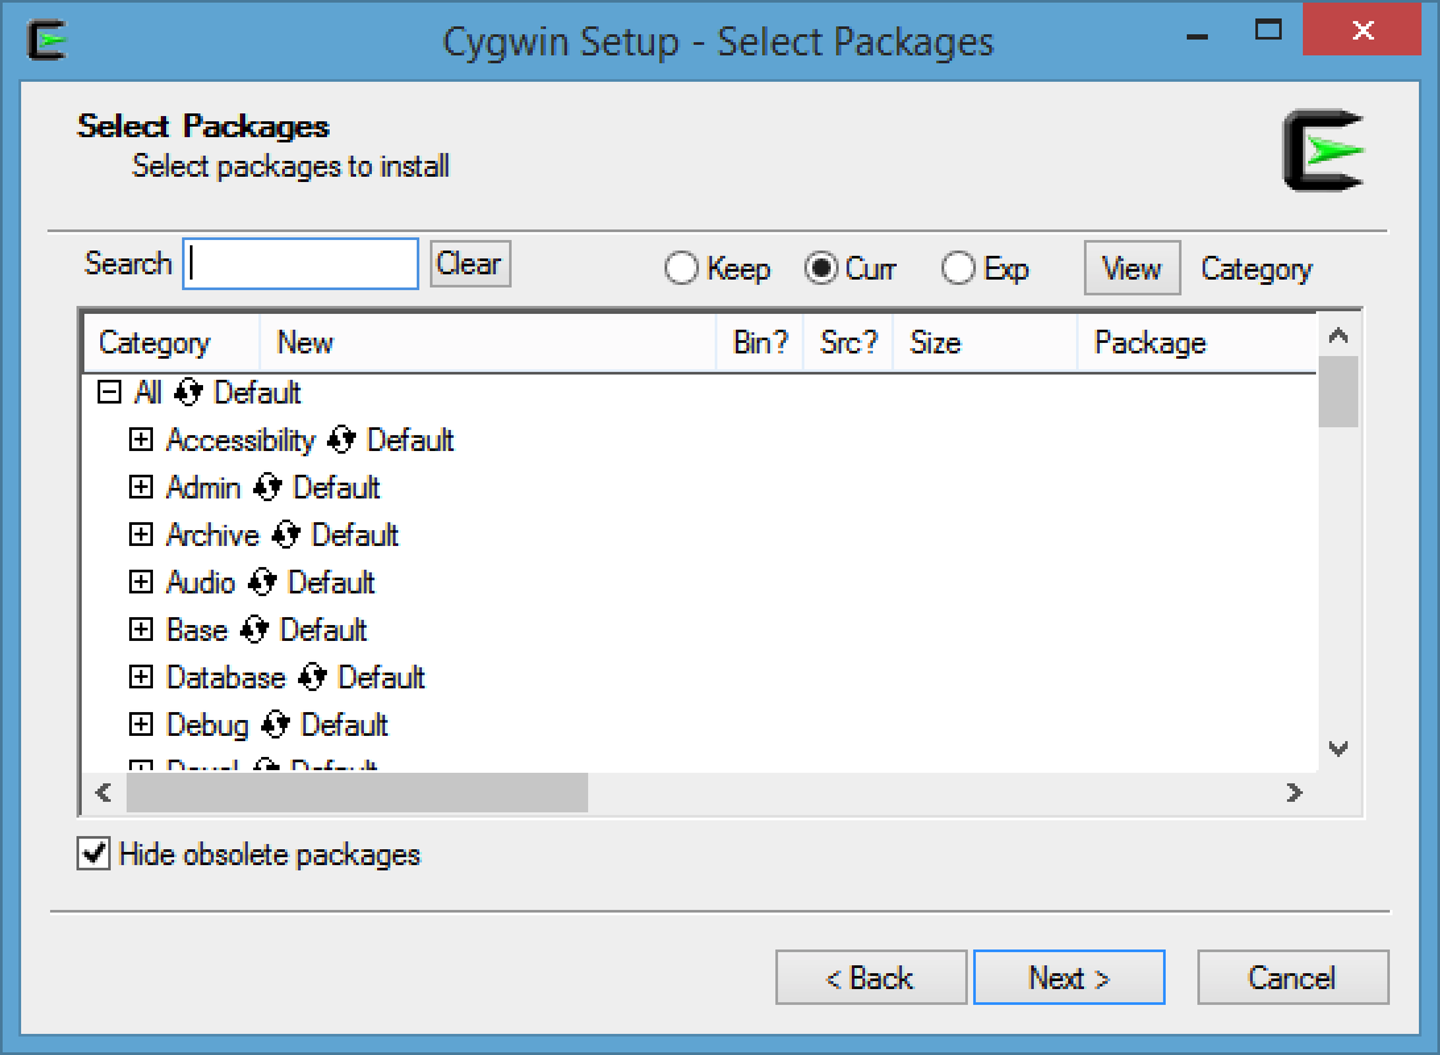 Cygwin’s setup dialog box.